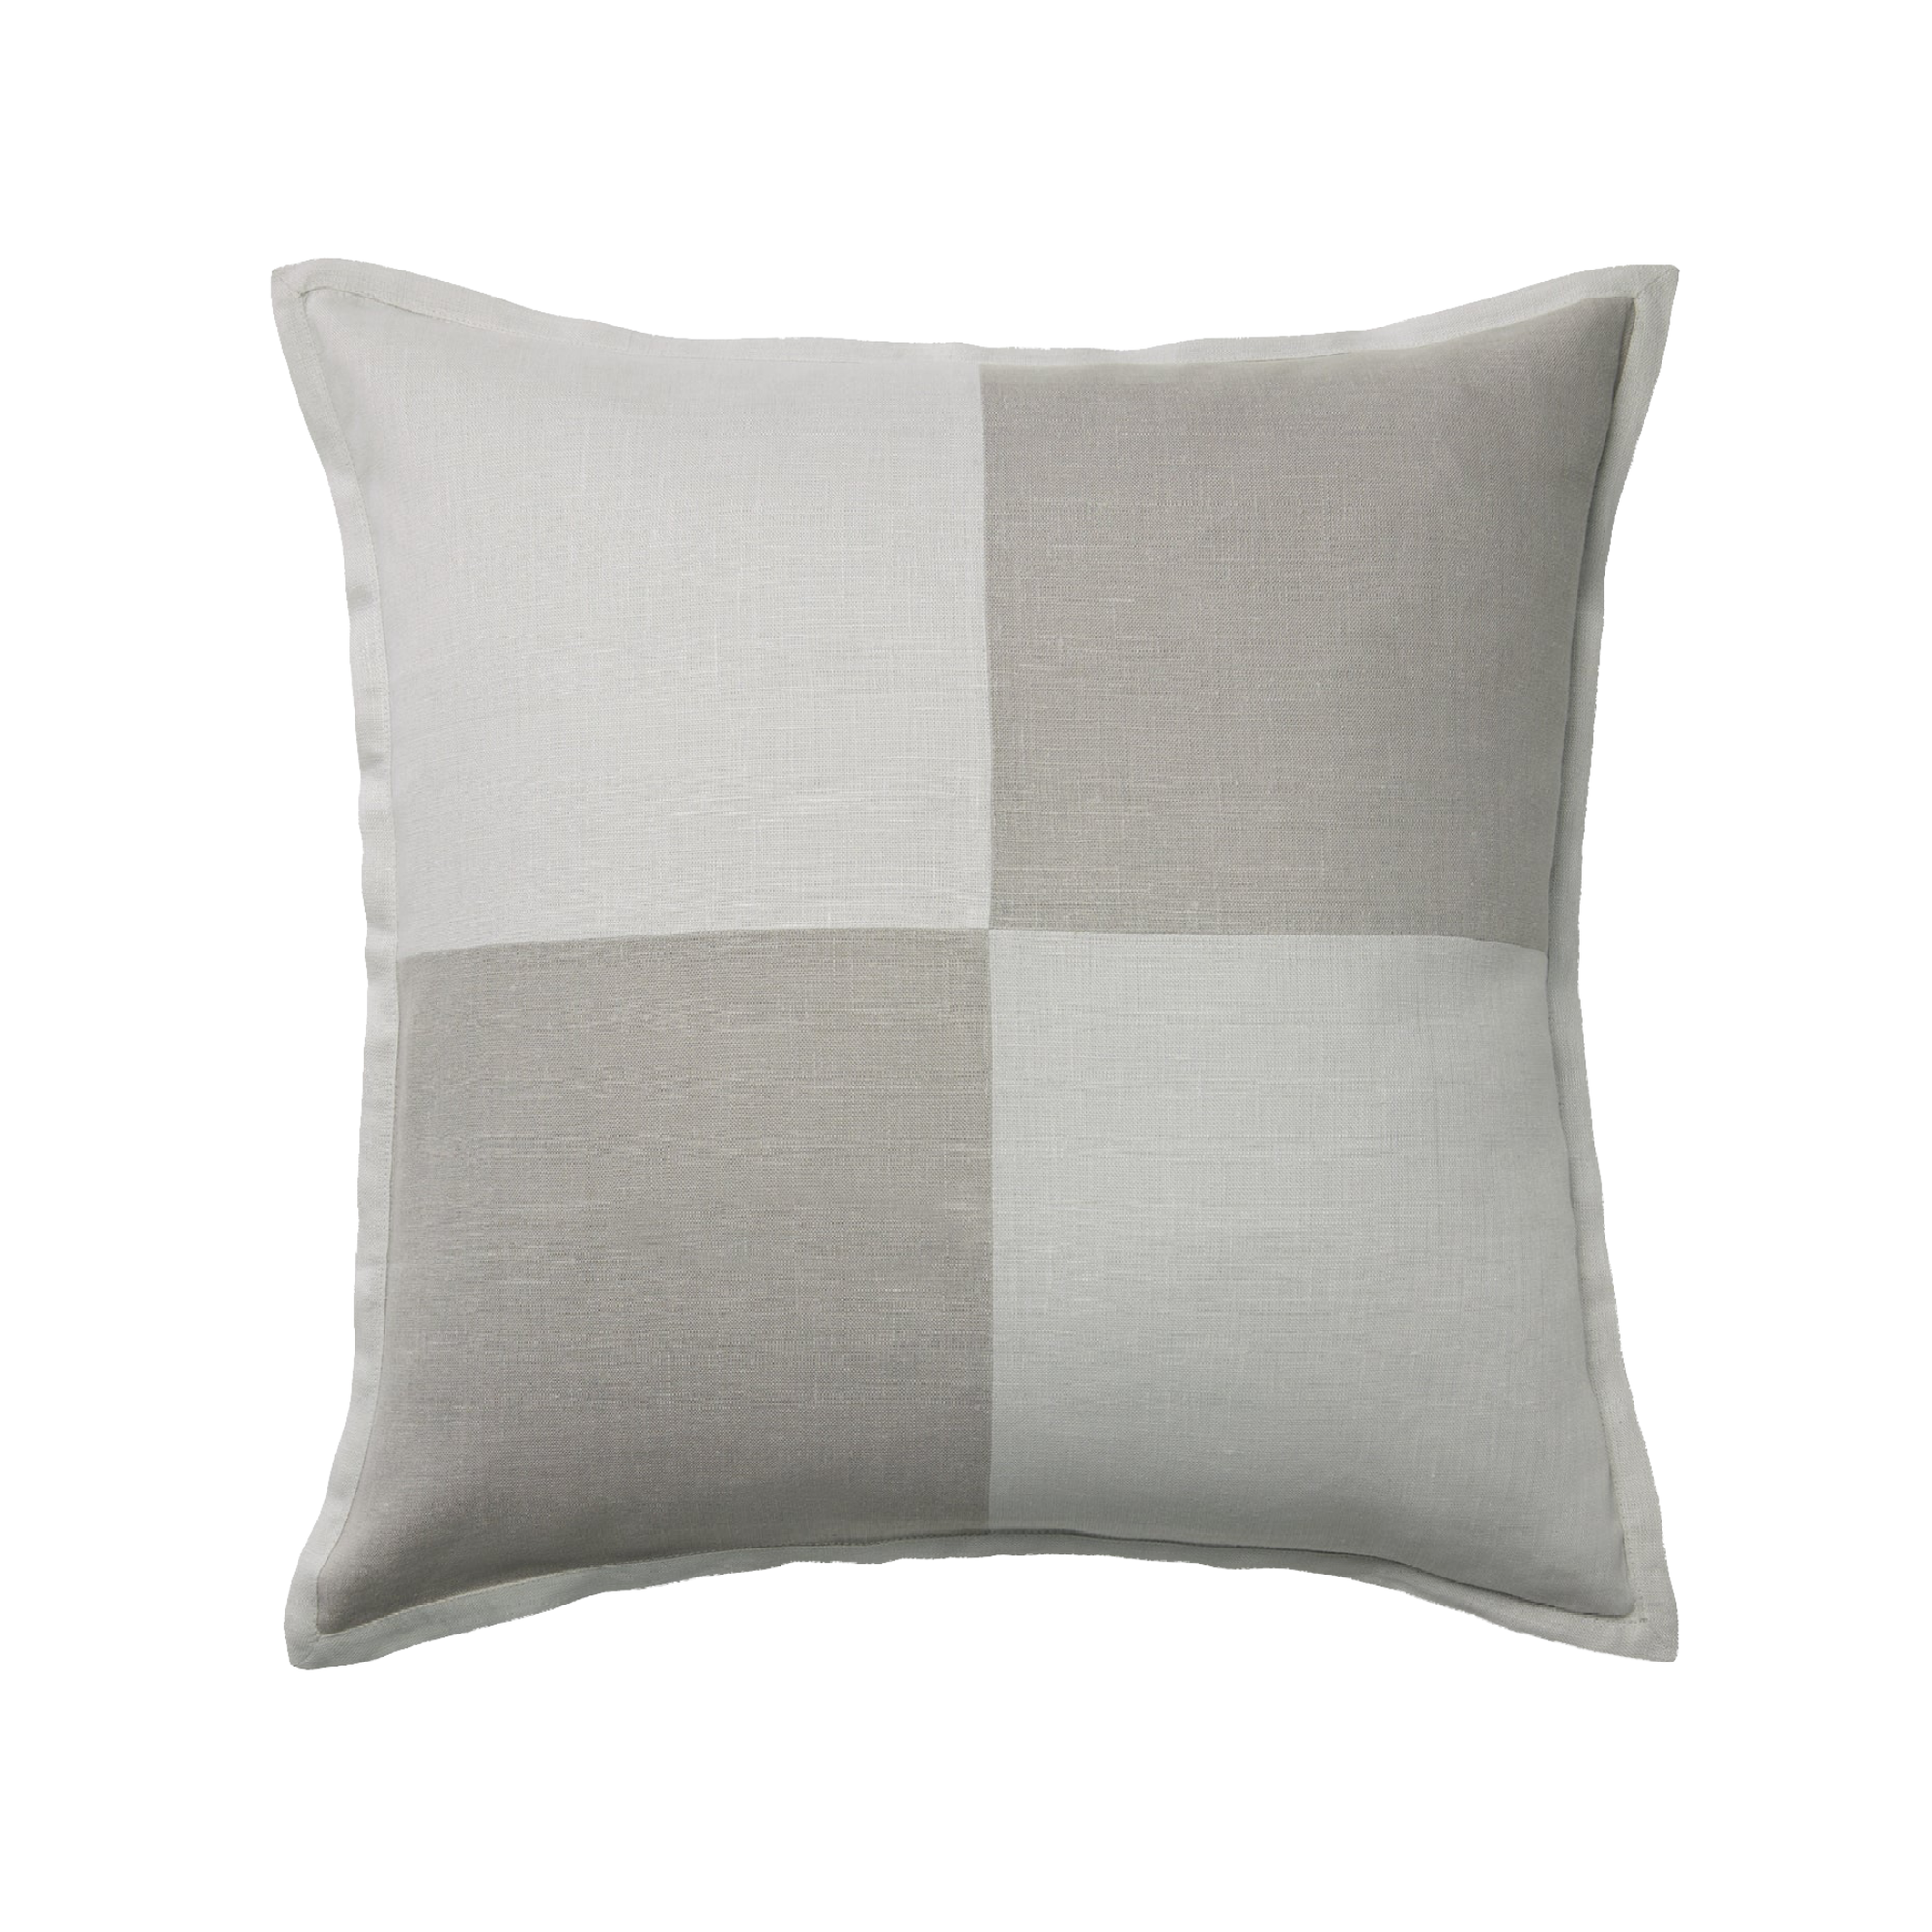 Sferra Scacchi Decorative Pillow in Platinum/Grey  Color